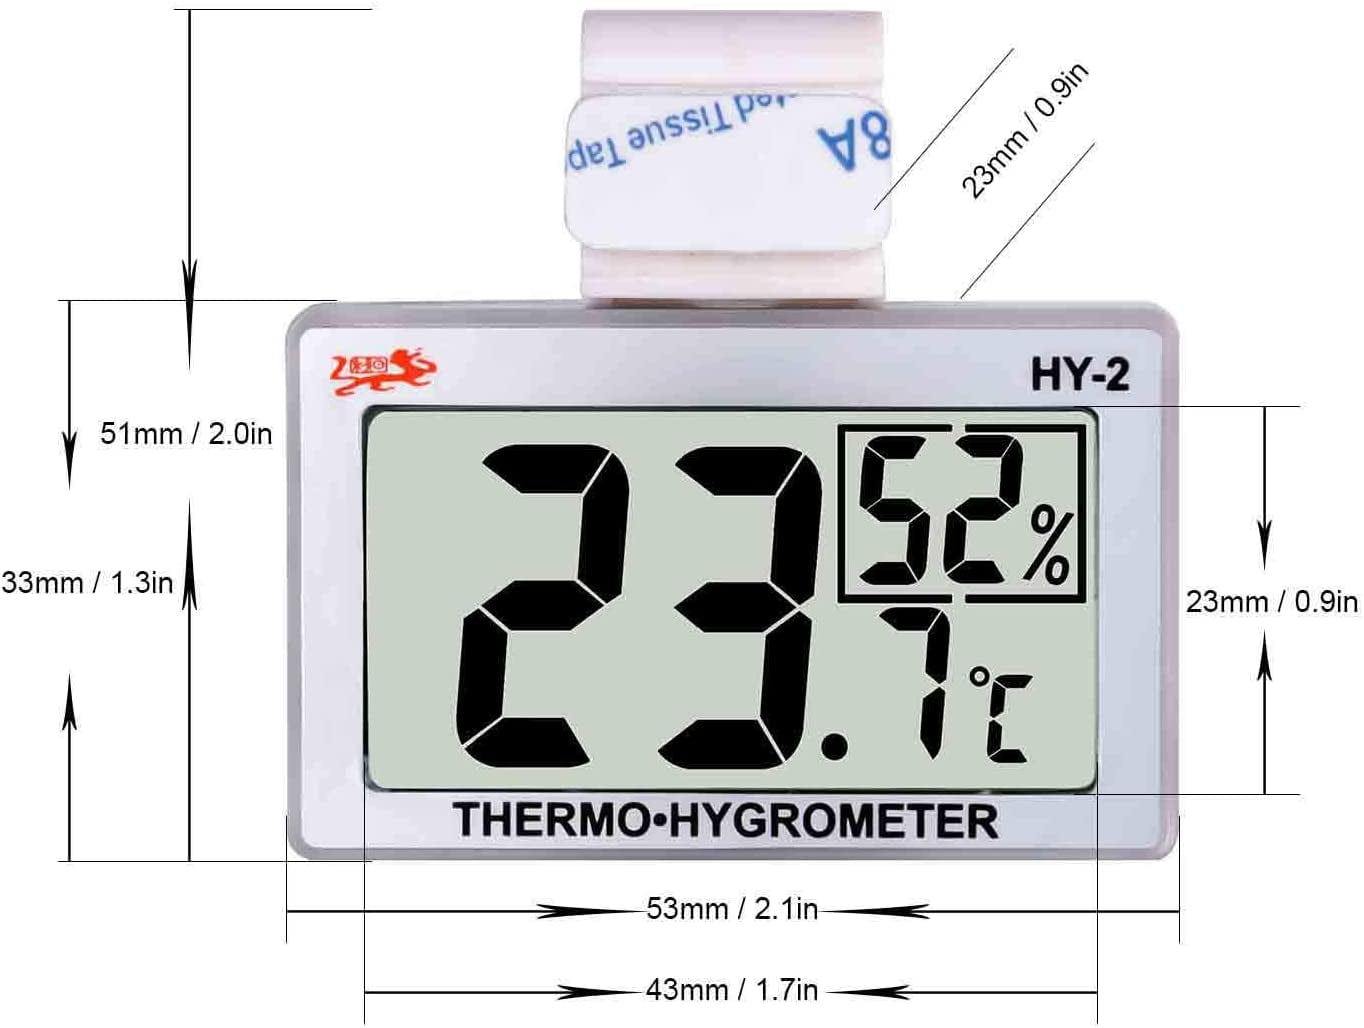 GXSTWU Reptile Hygrometer Thermometer LCD Display Digital Reptile Tank Hygrometer Thermometer with Hook Temperature Humidity Meter Gauge for Reptile